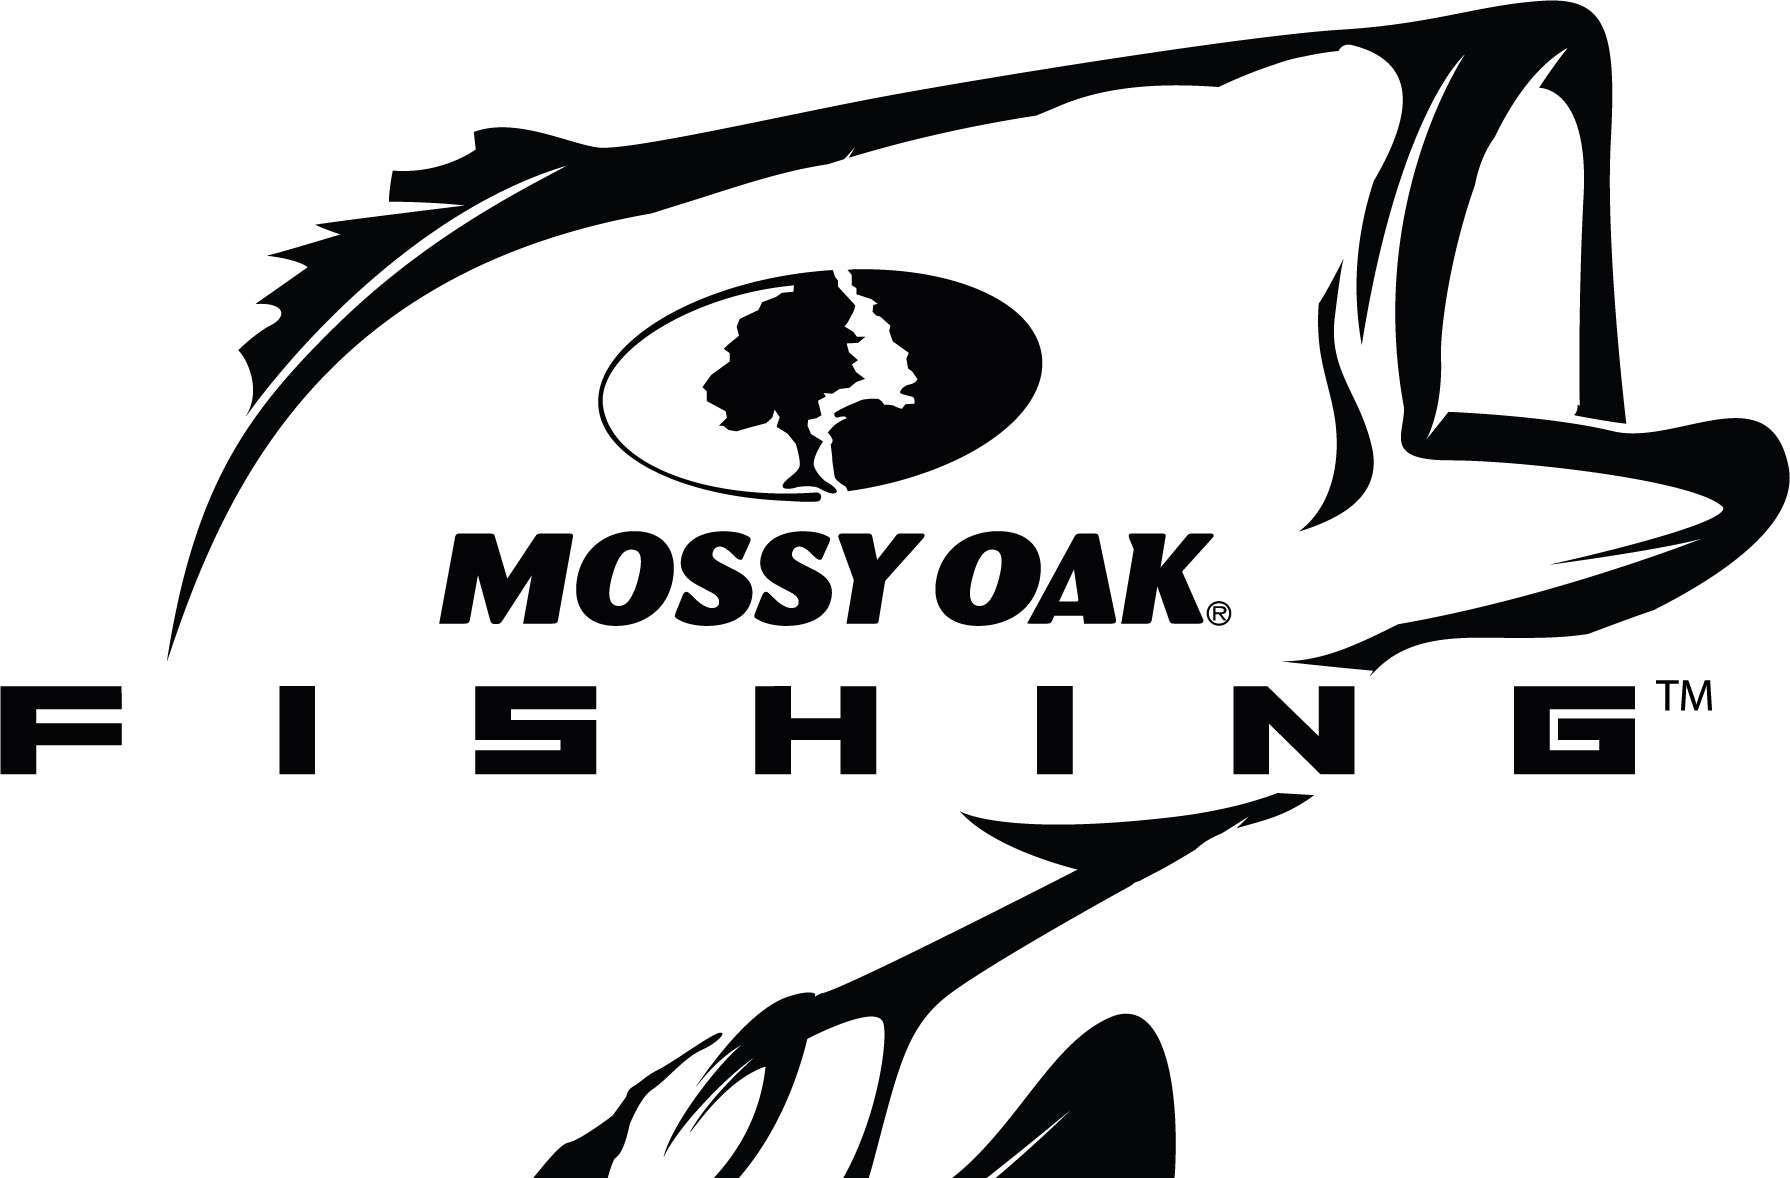 Mossy Oak Logo - Mossy Oak supporting sponsor of College Series | Bassmaster